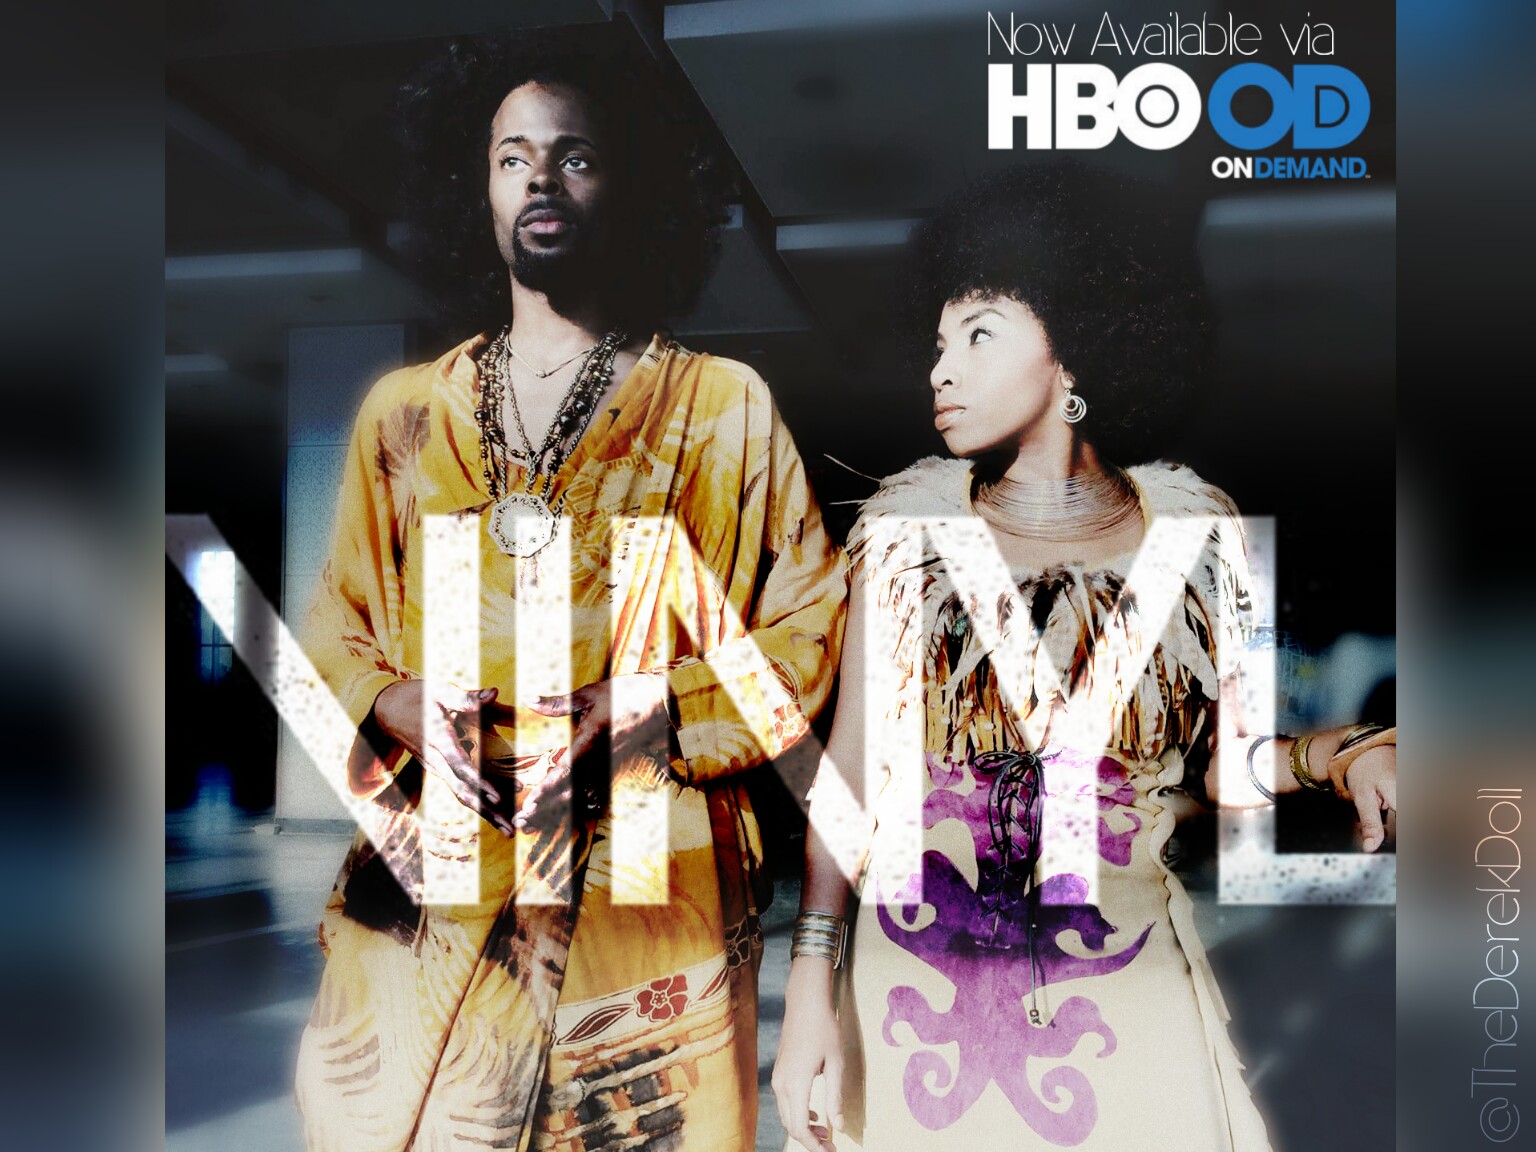 Derek Doll and Shalandrea Renee Houchen, supporting actors on HBO's new hit drama 'Vinyl' (Season 1, Episode 4)